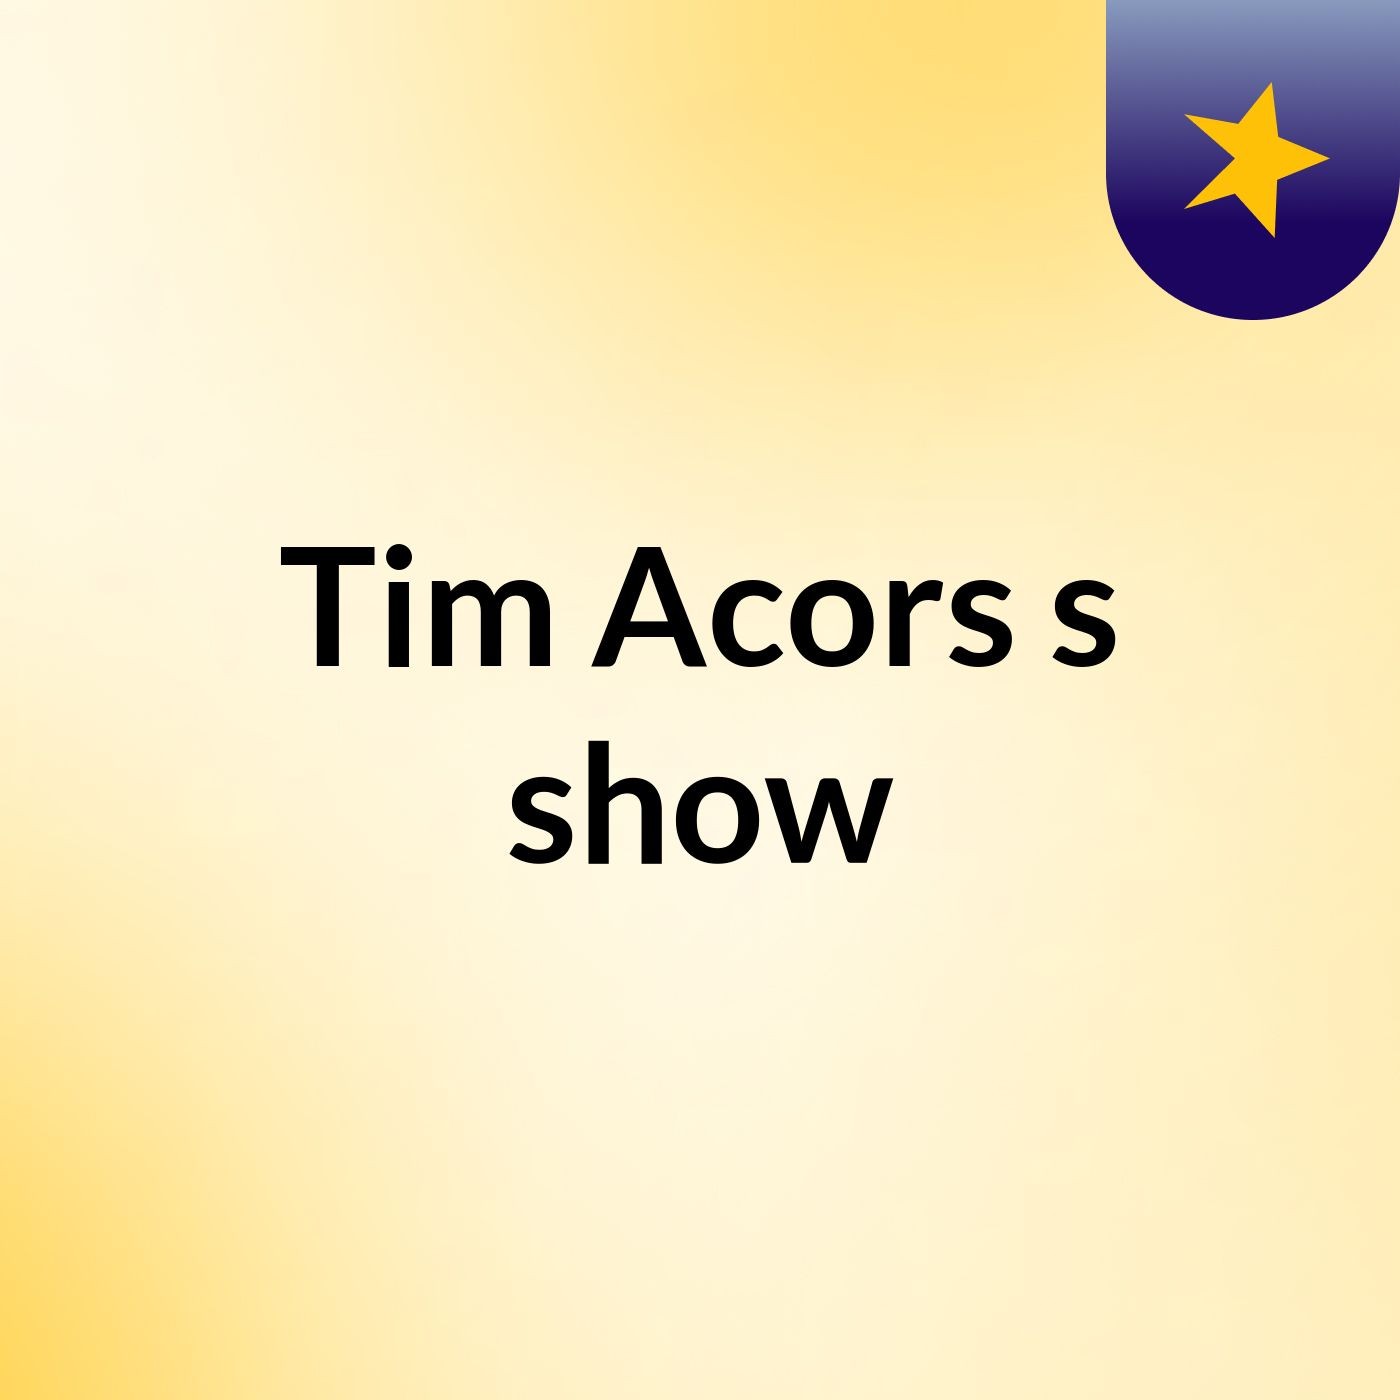 Tim Acors's show